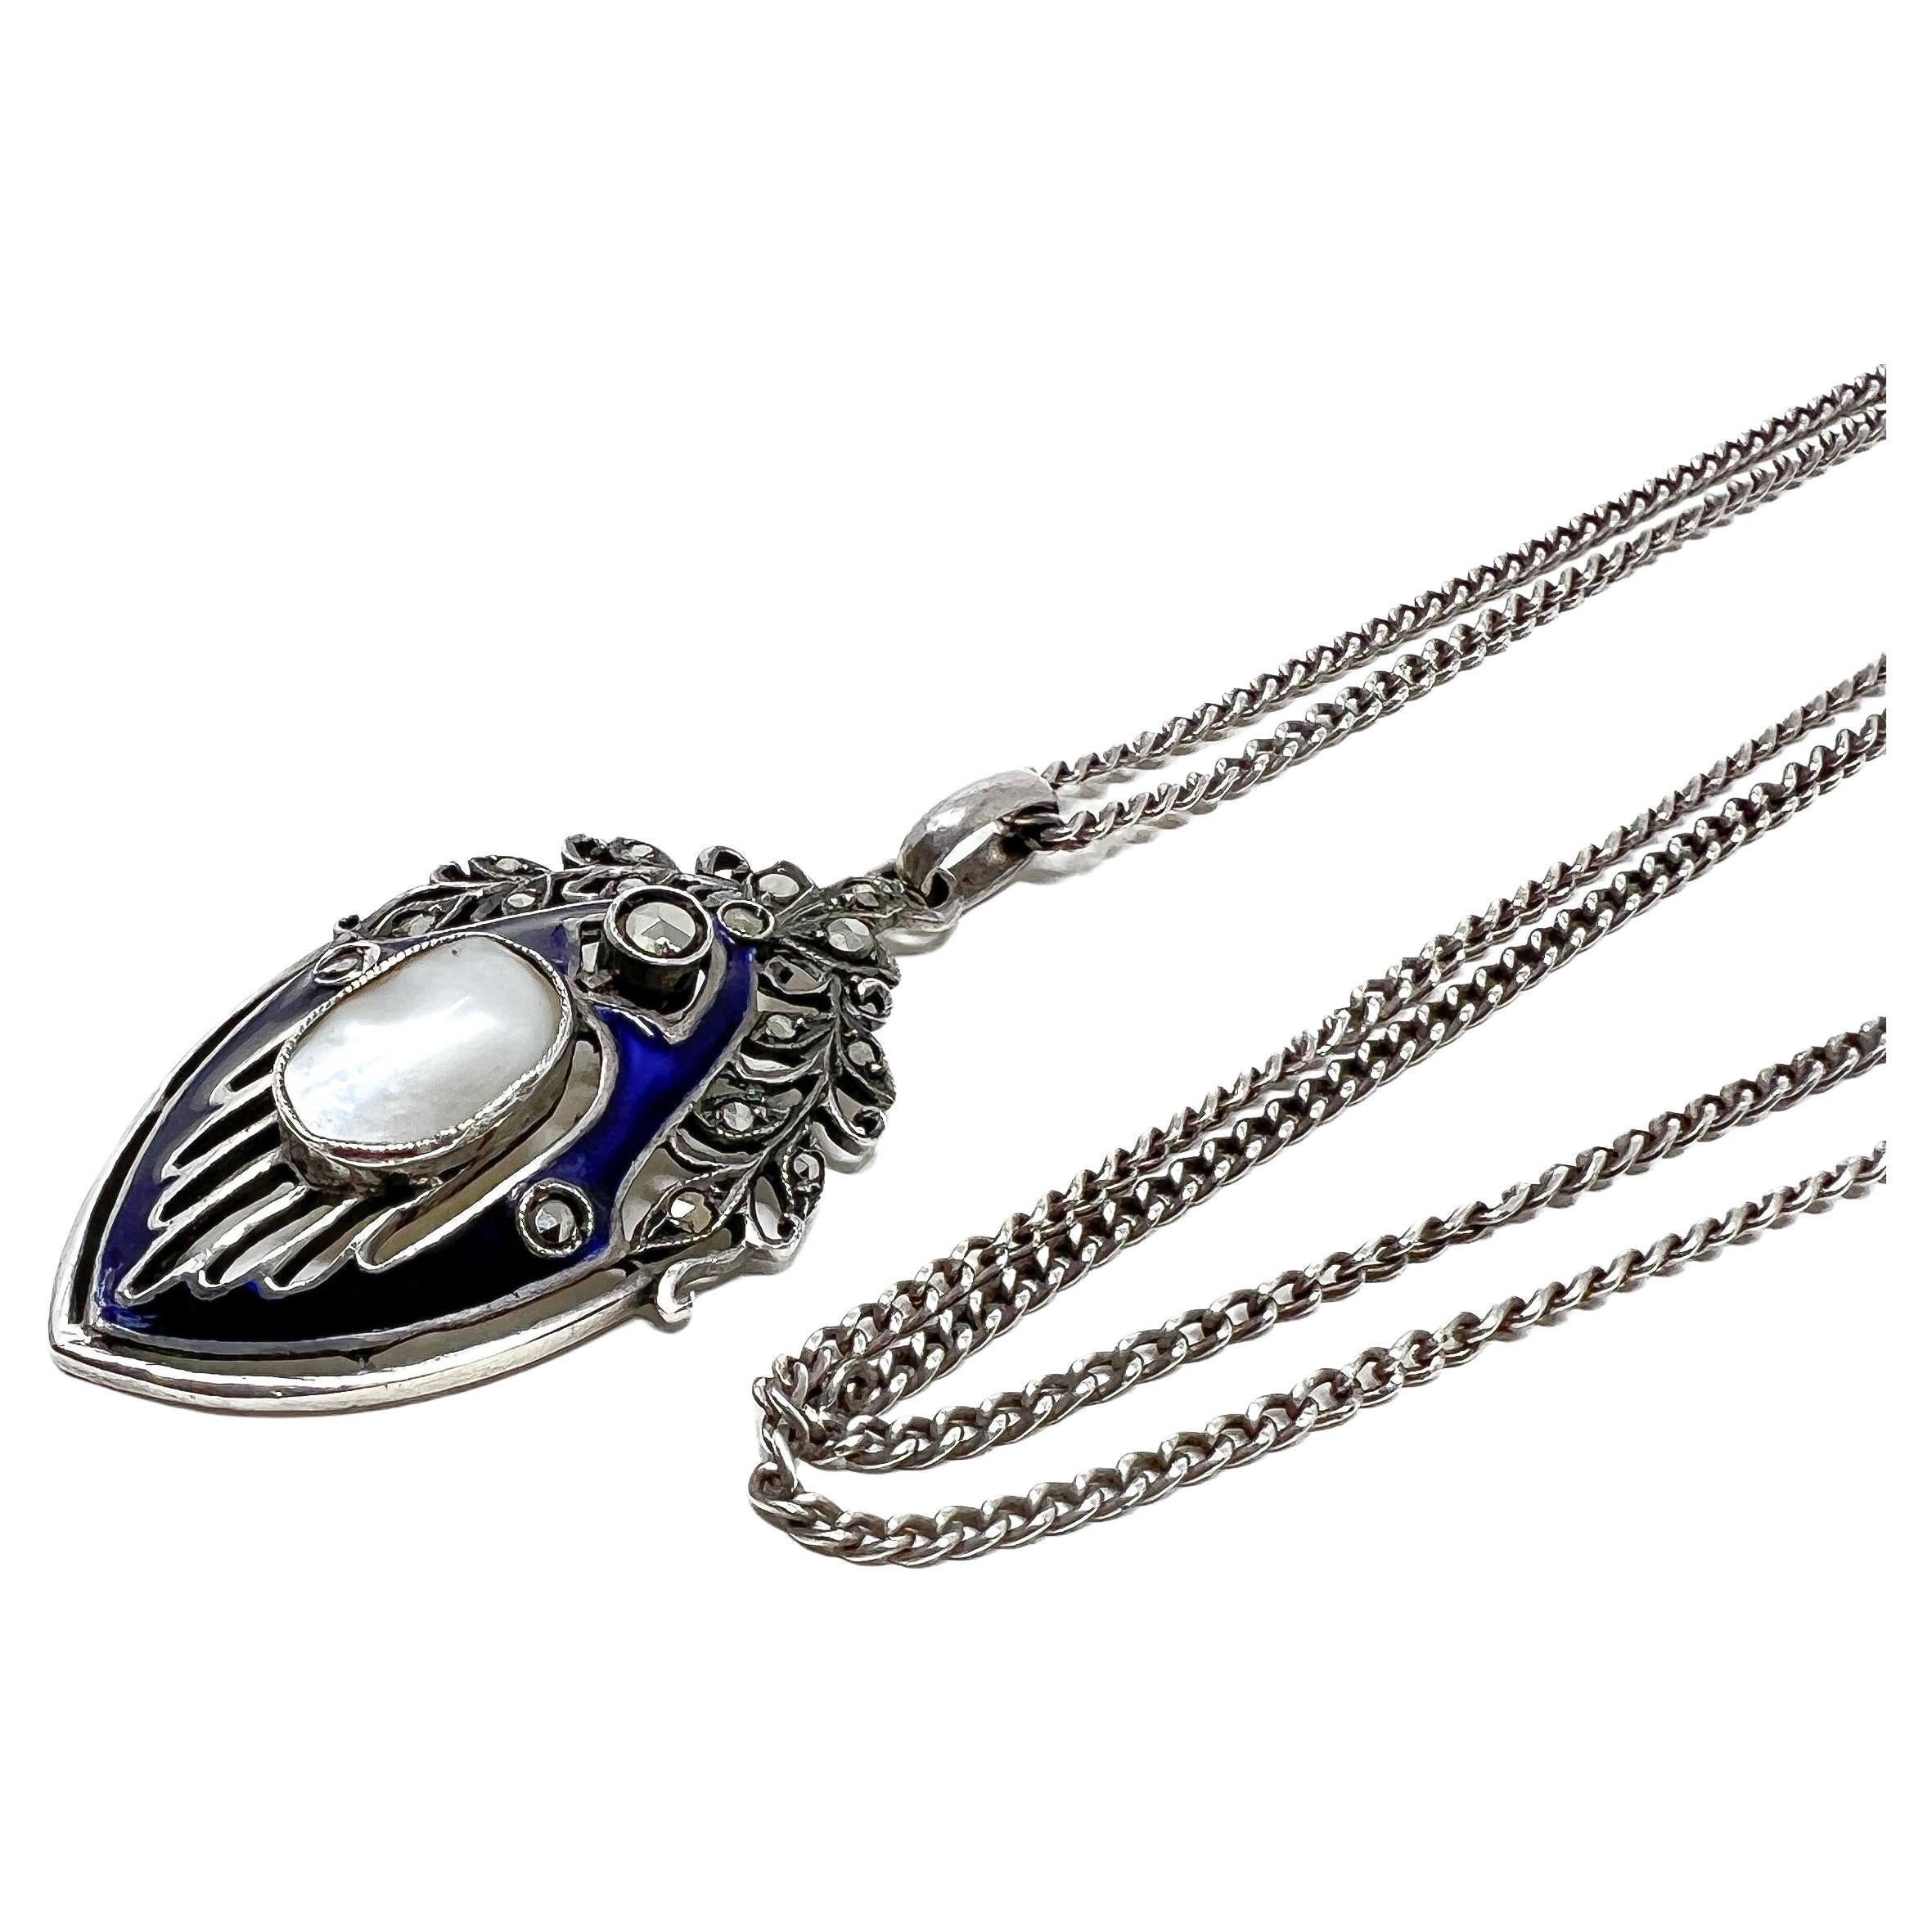 Theodor Fahrner c.1920 Silver, Enamel and Marcasite Vintage Pendant Necklace